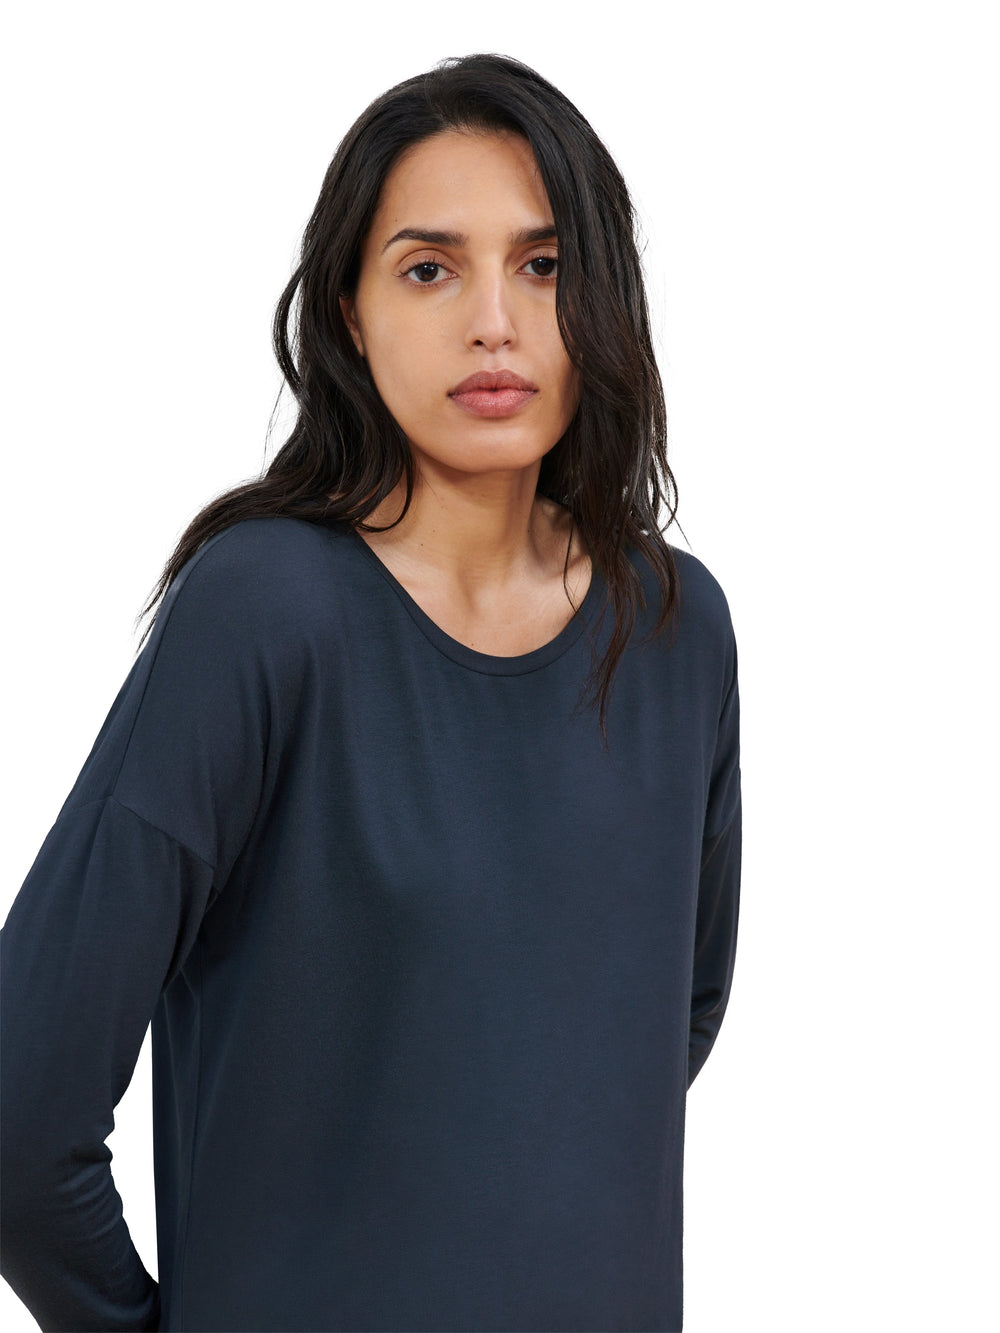 Femilet - Yara T-Shirt Ls Navy Dunkelblaues Pyjama-Oberteil Femilet